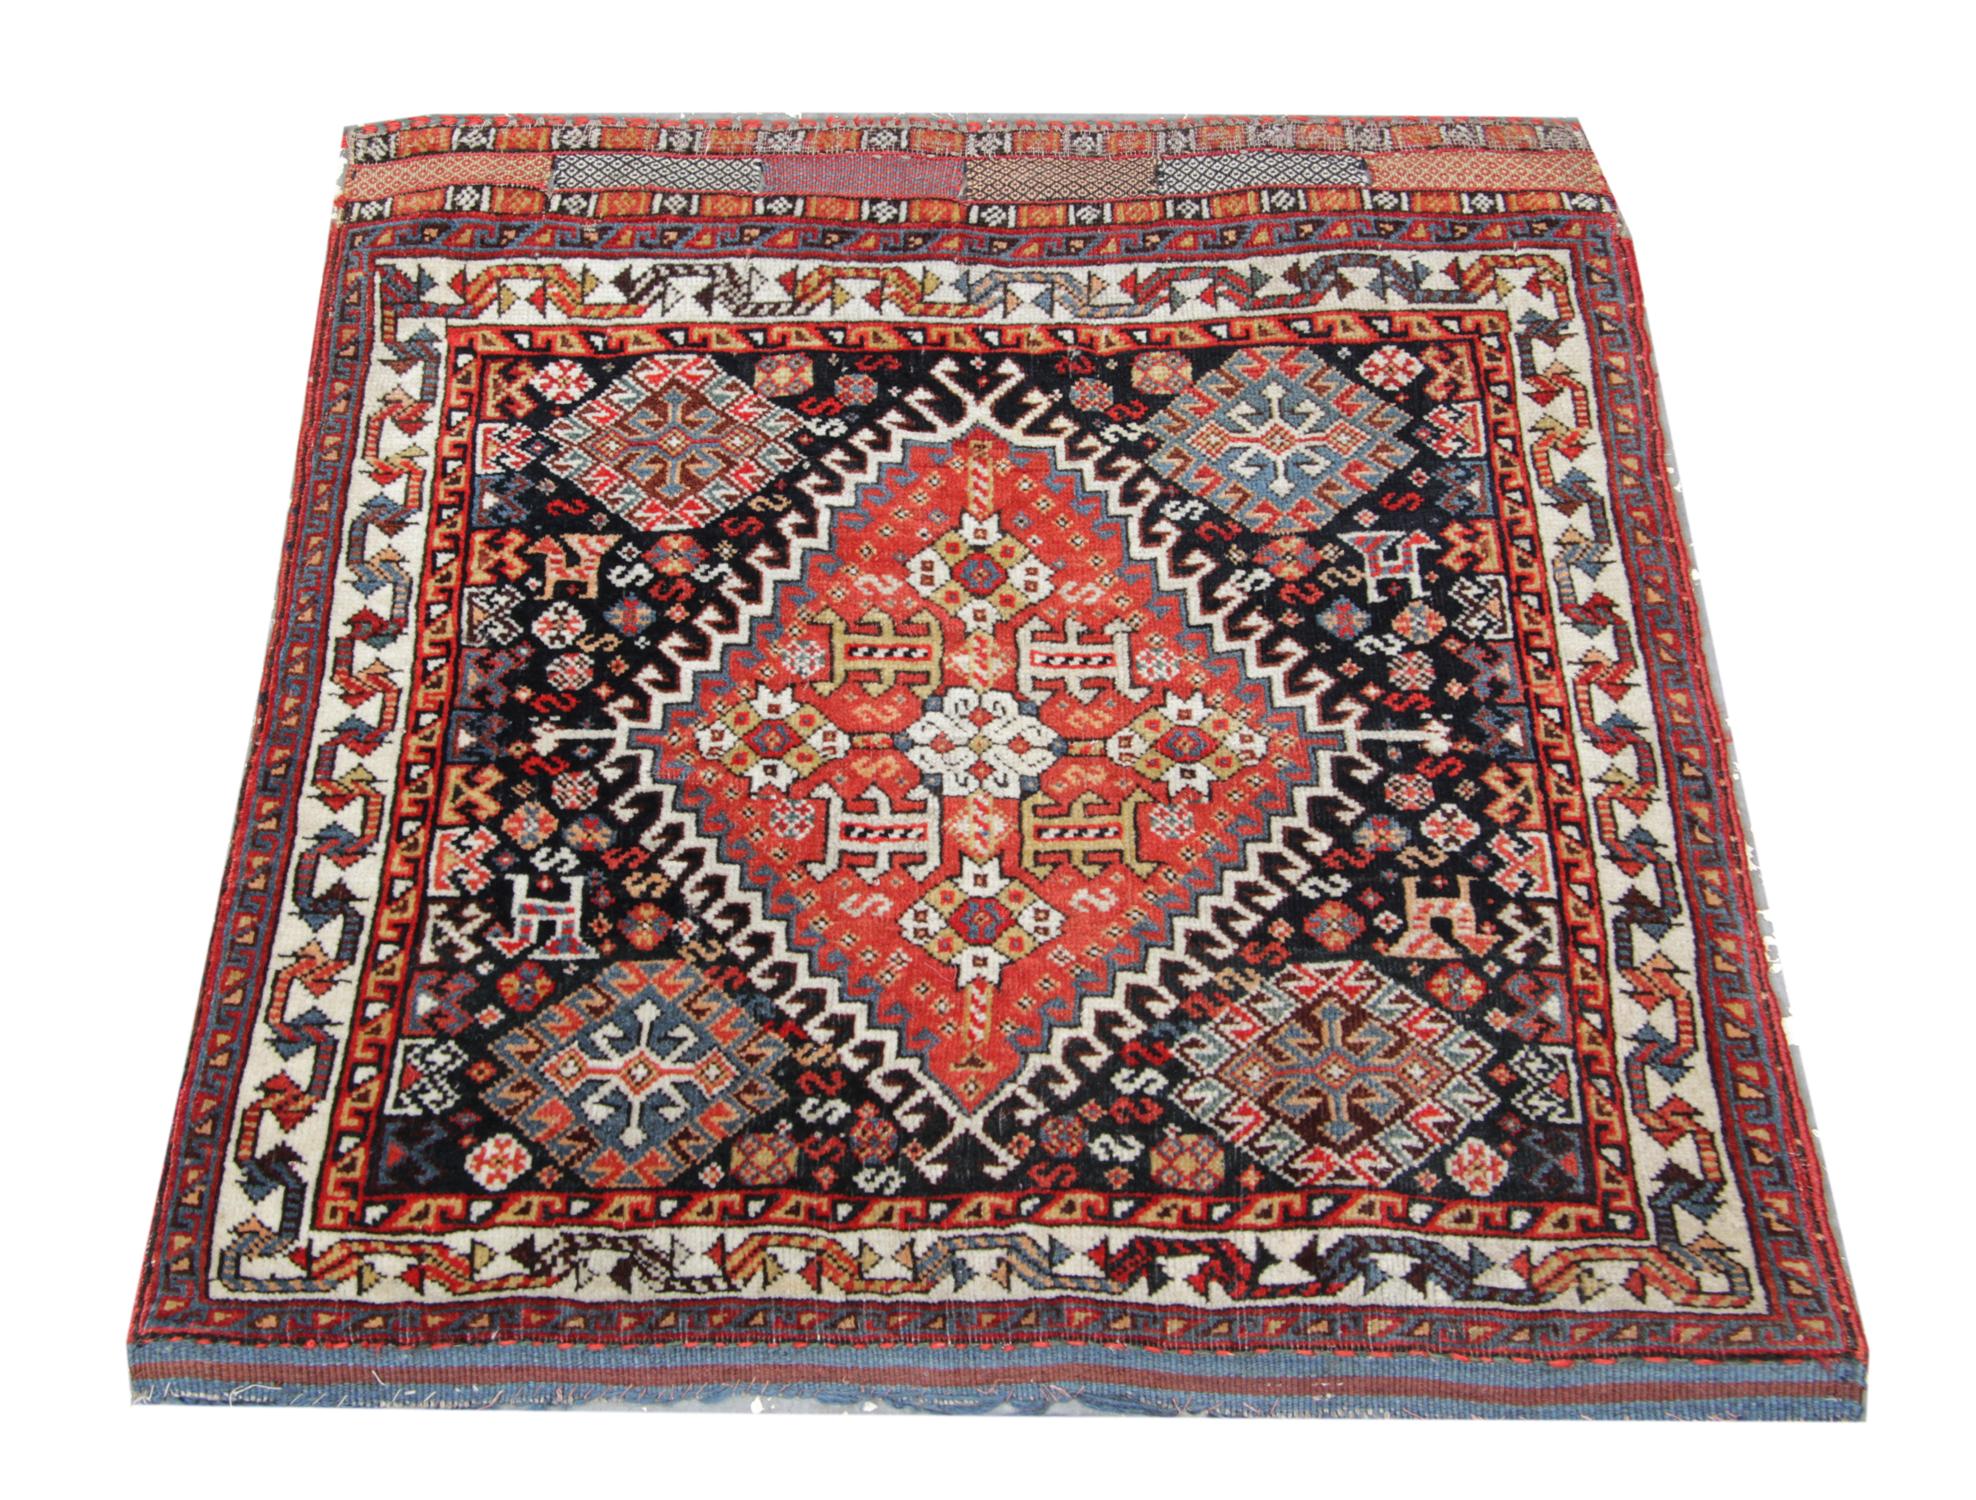 Caucasian Square Medallion Carpet Handwoven Tribal Oriental Wool Area Rug For Sale